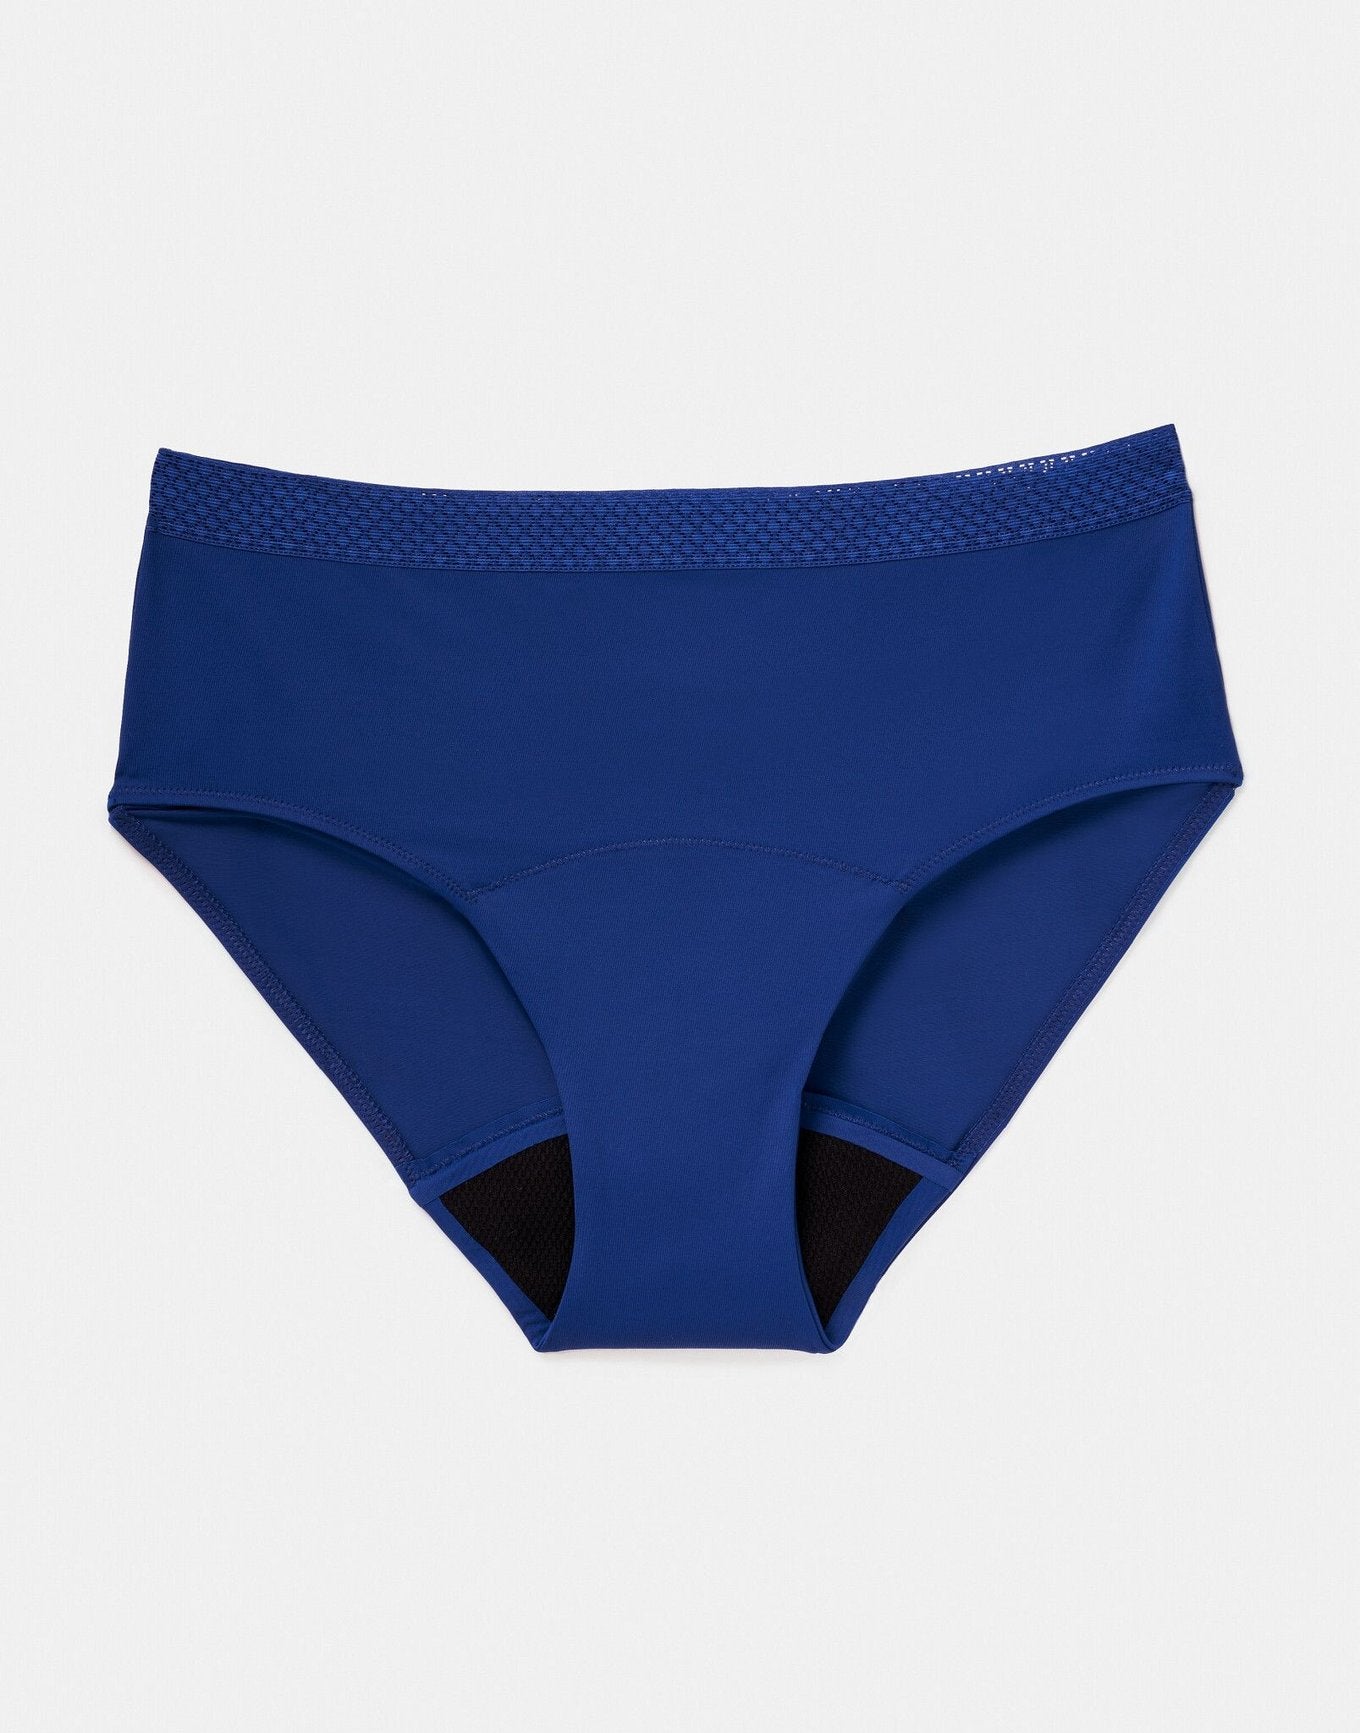 Joyja Madison period-proof panty in color Sodalite Blue and shape midi brief